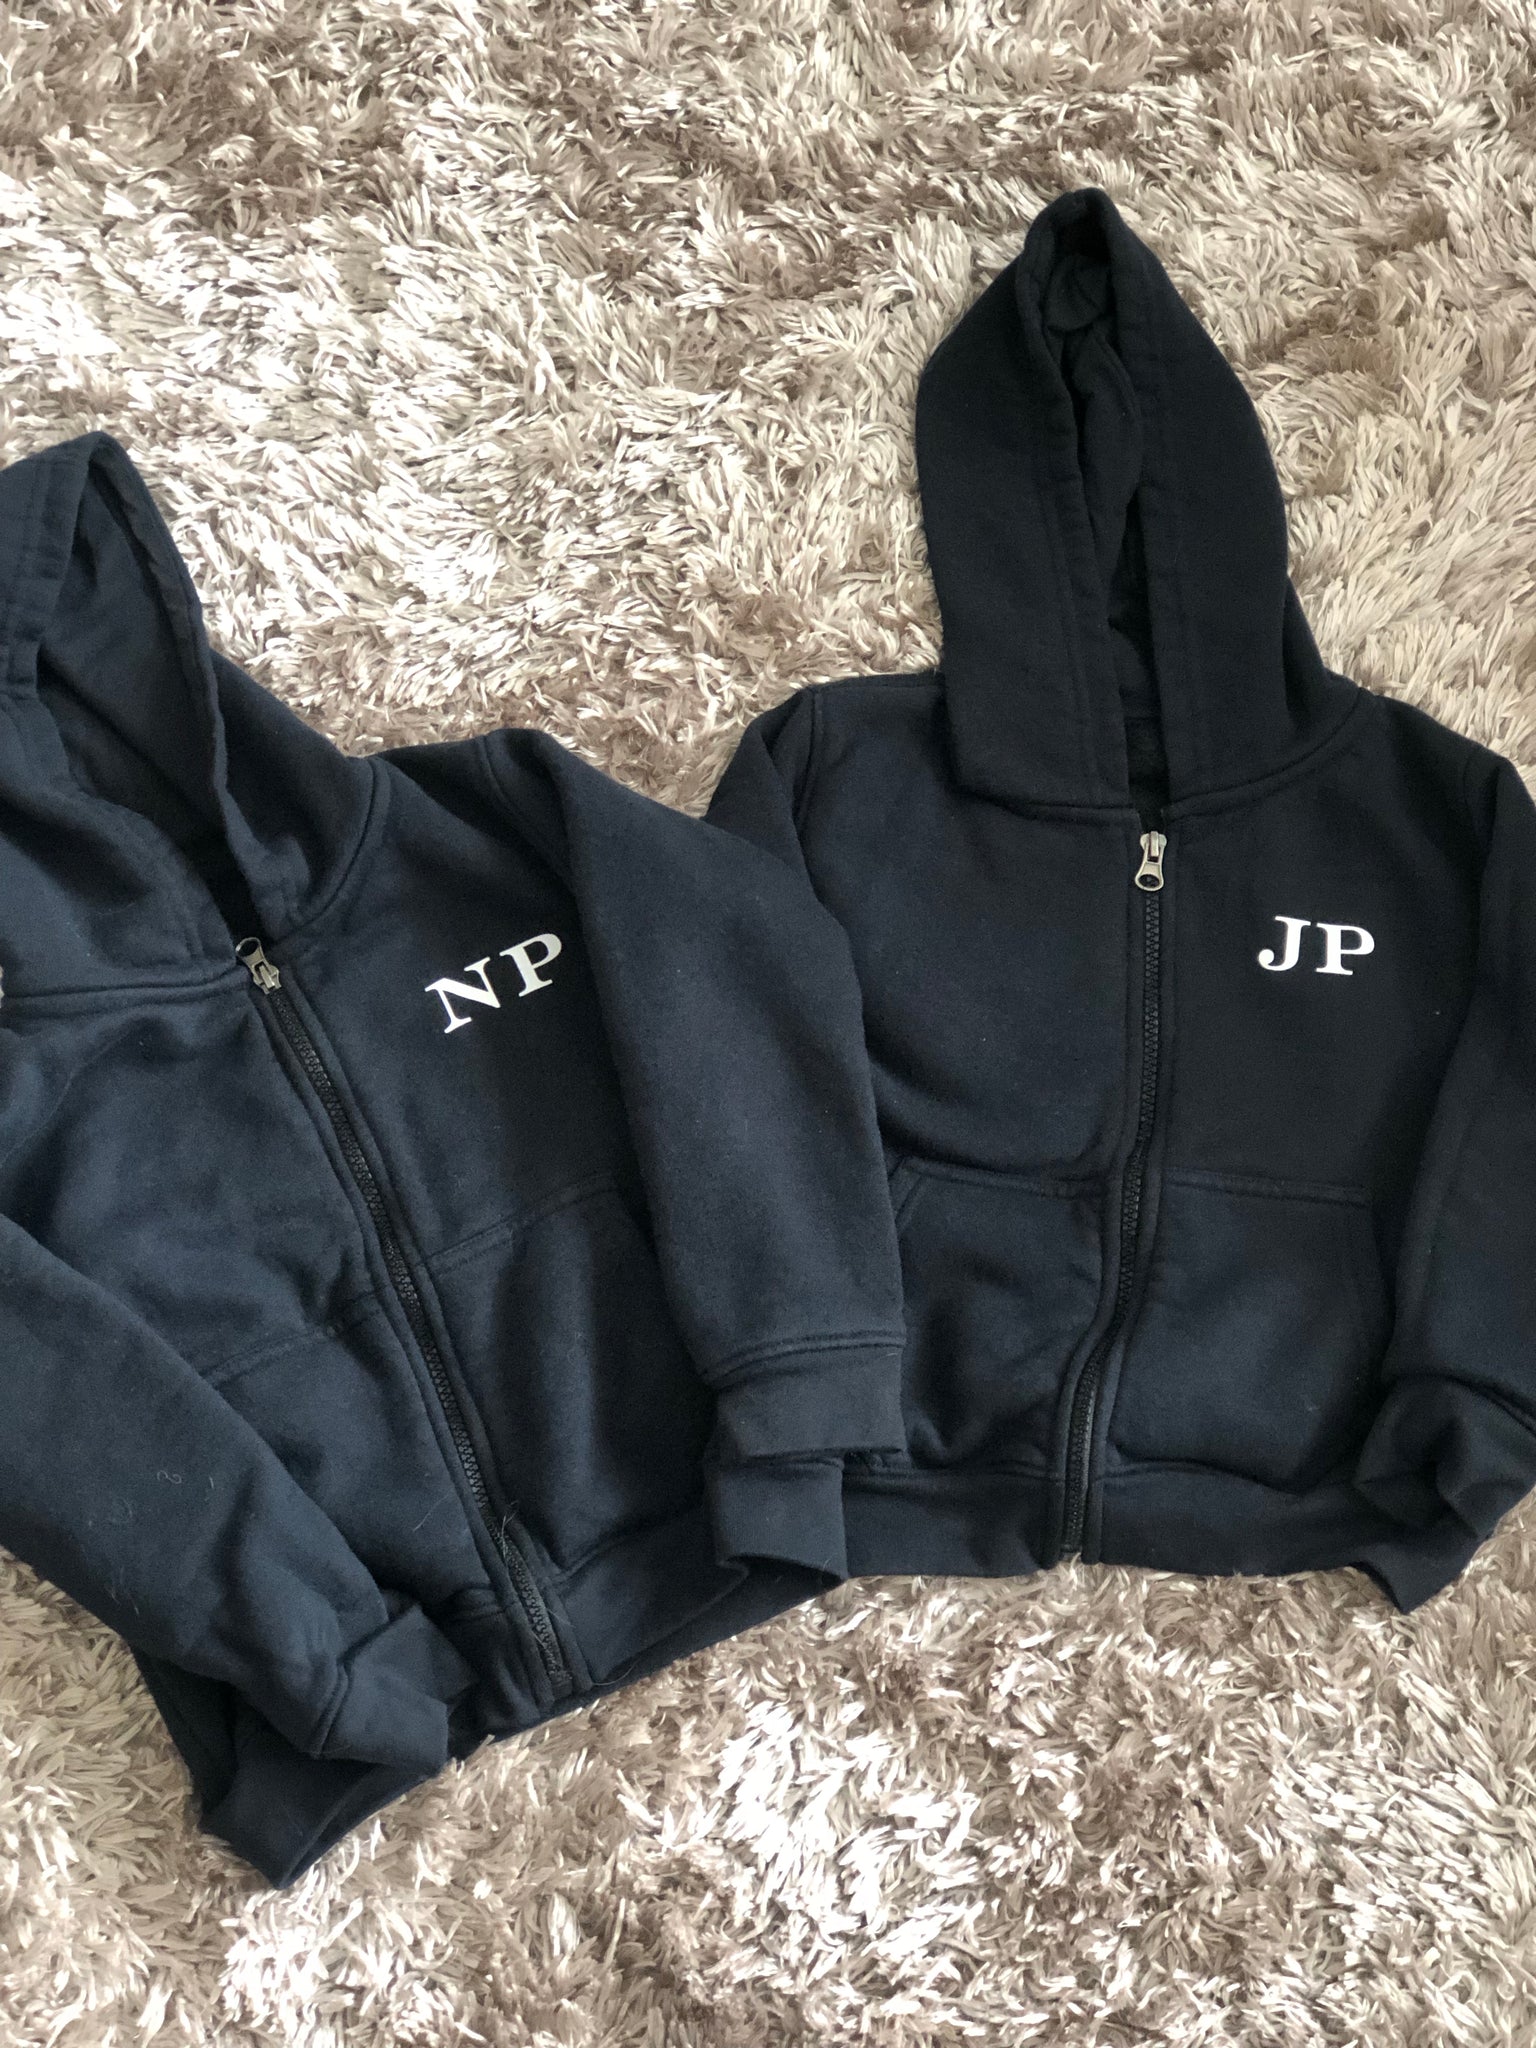 Initial zip up hoodies